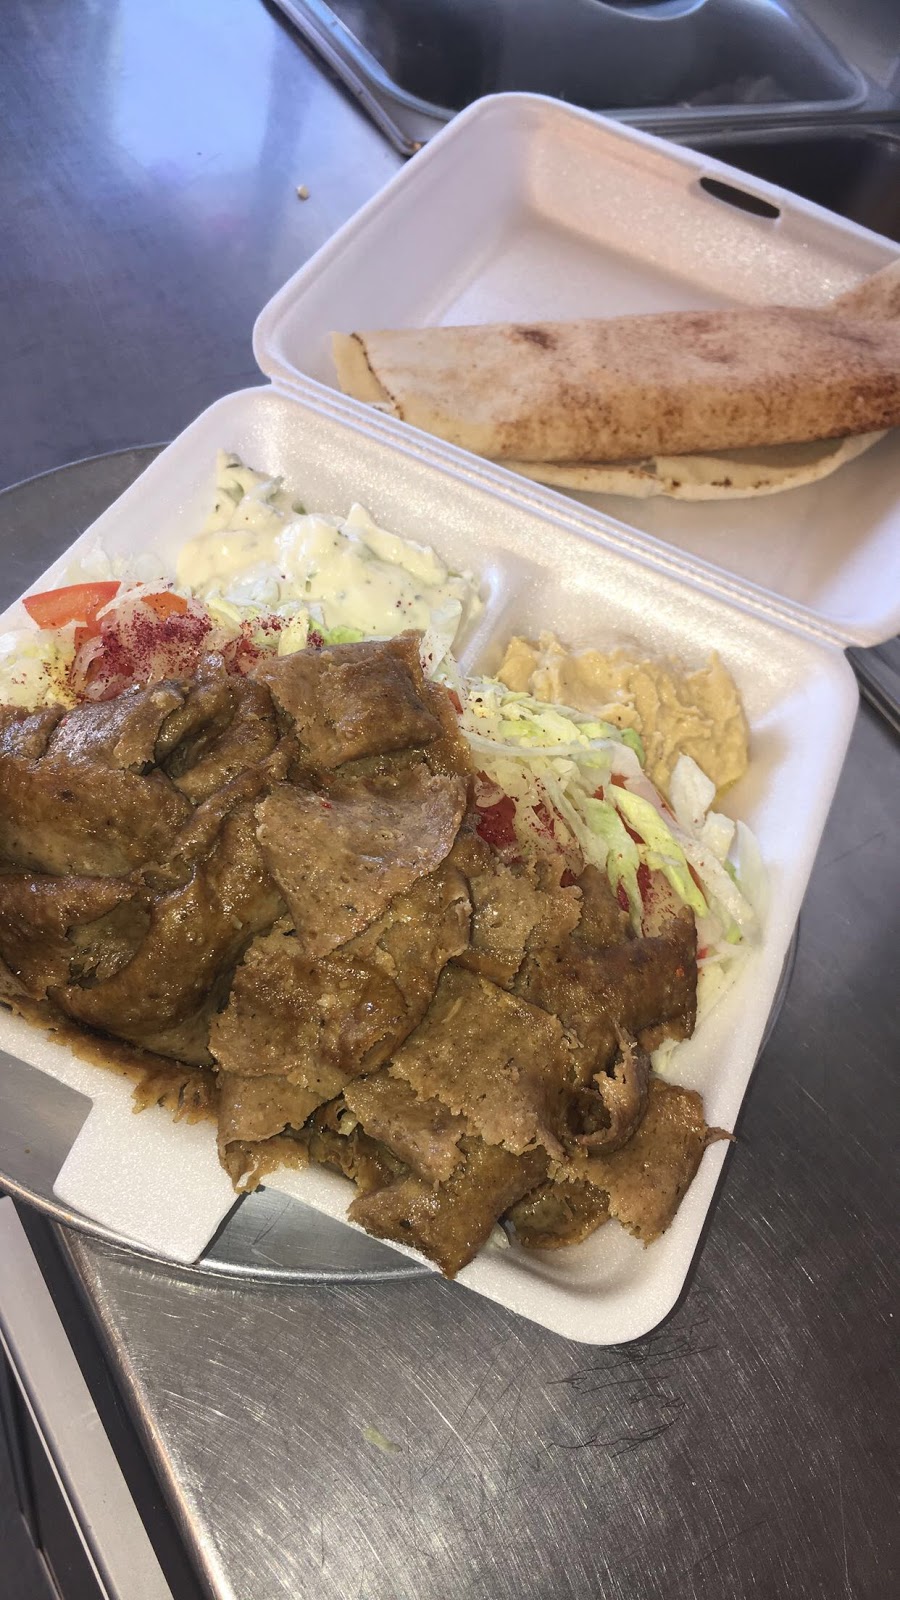 Nur Kebab | restaurant | 300 Frankston - Dandenong Rd, Seaford VIC 3198, Australia | 0397857503 OR +61 3 9785 7503